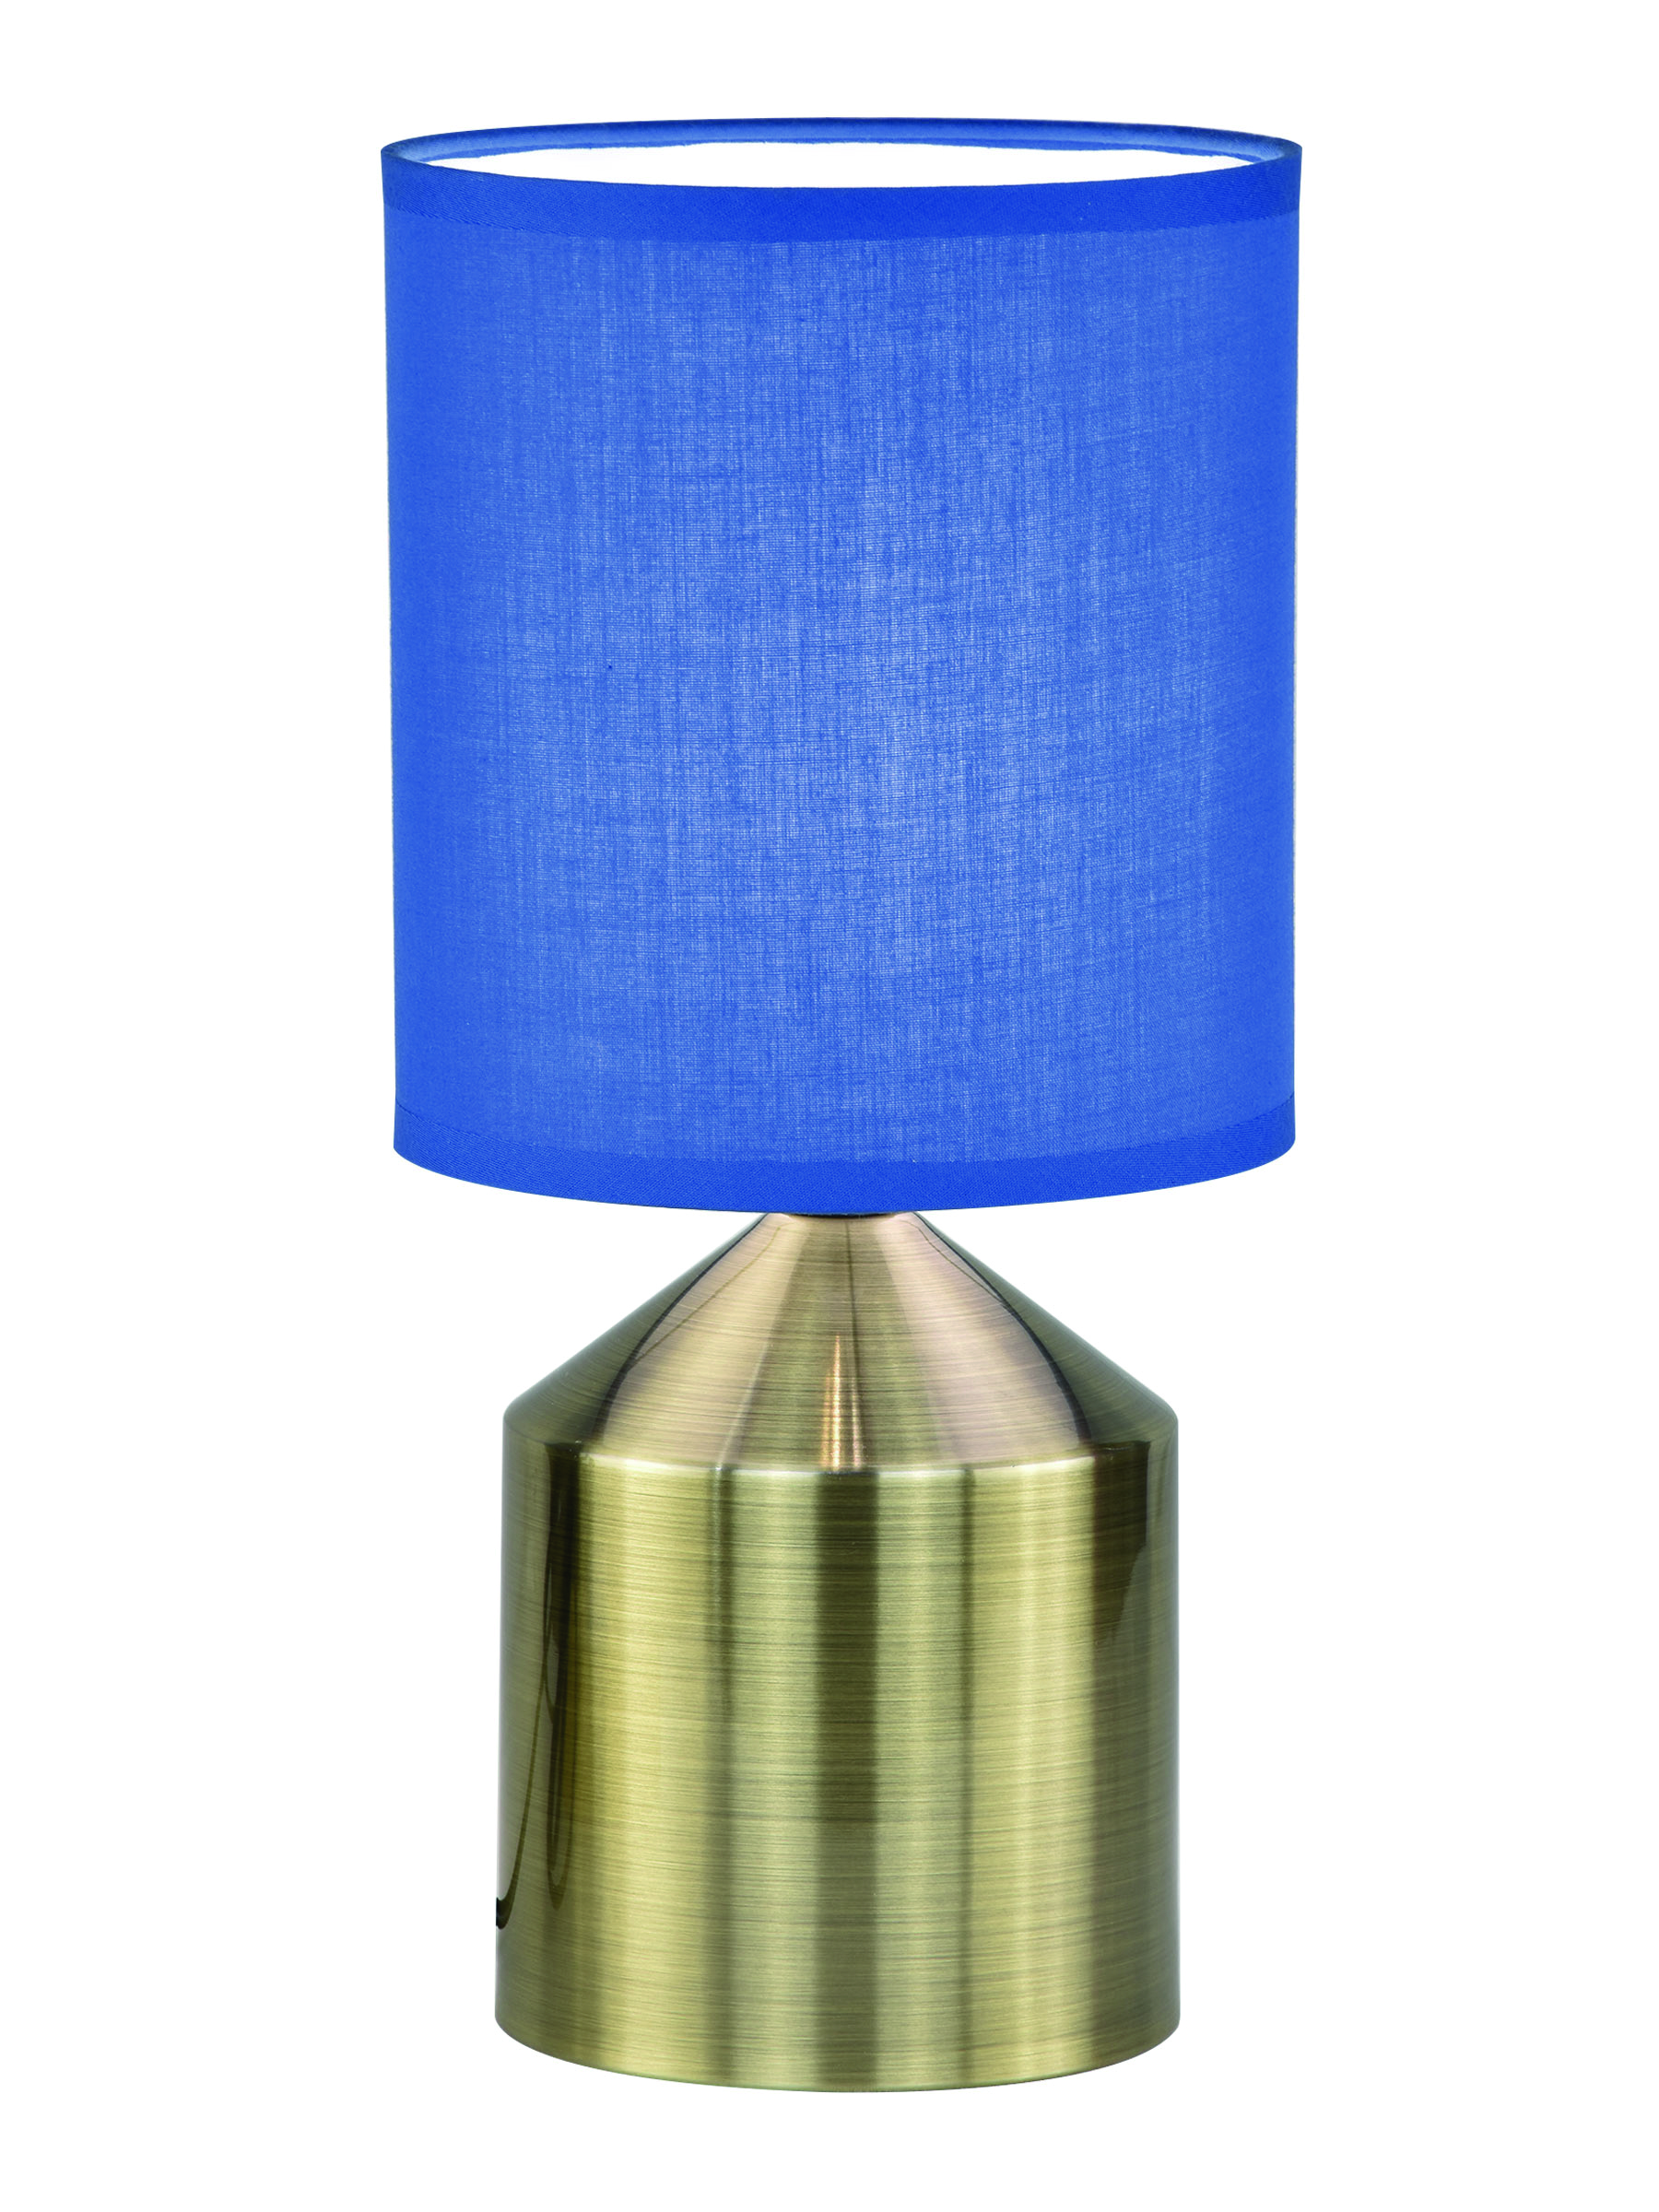 Настольная лампа Escada DANA 709/1L Blue, цвет синий 709/1L Blue - фото 1